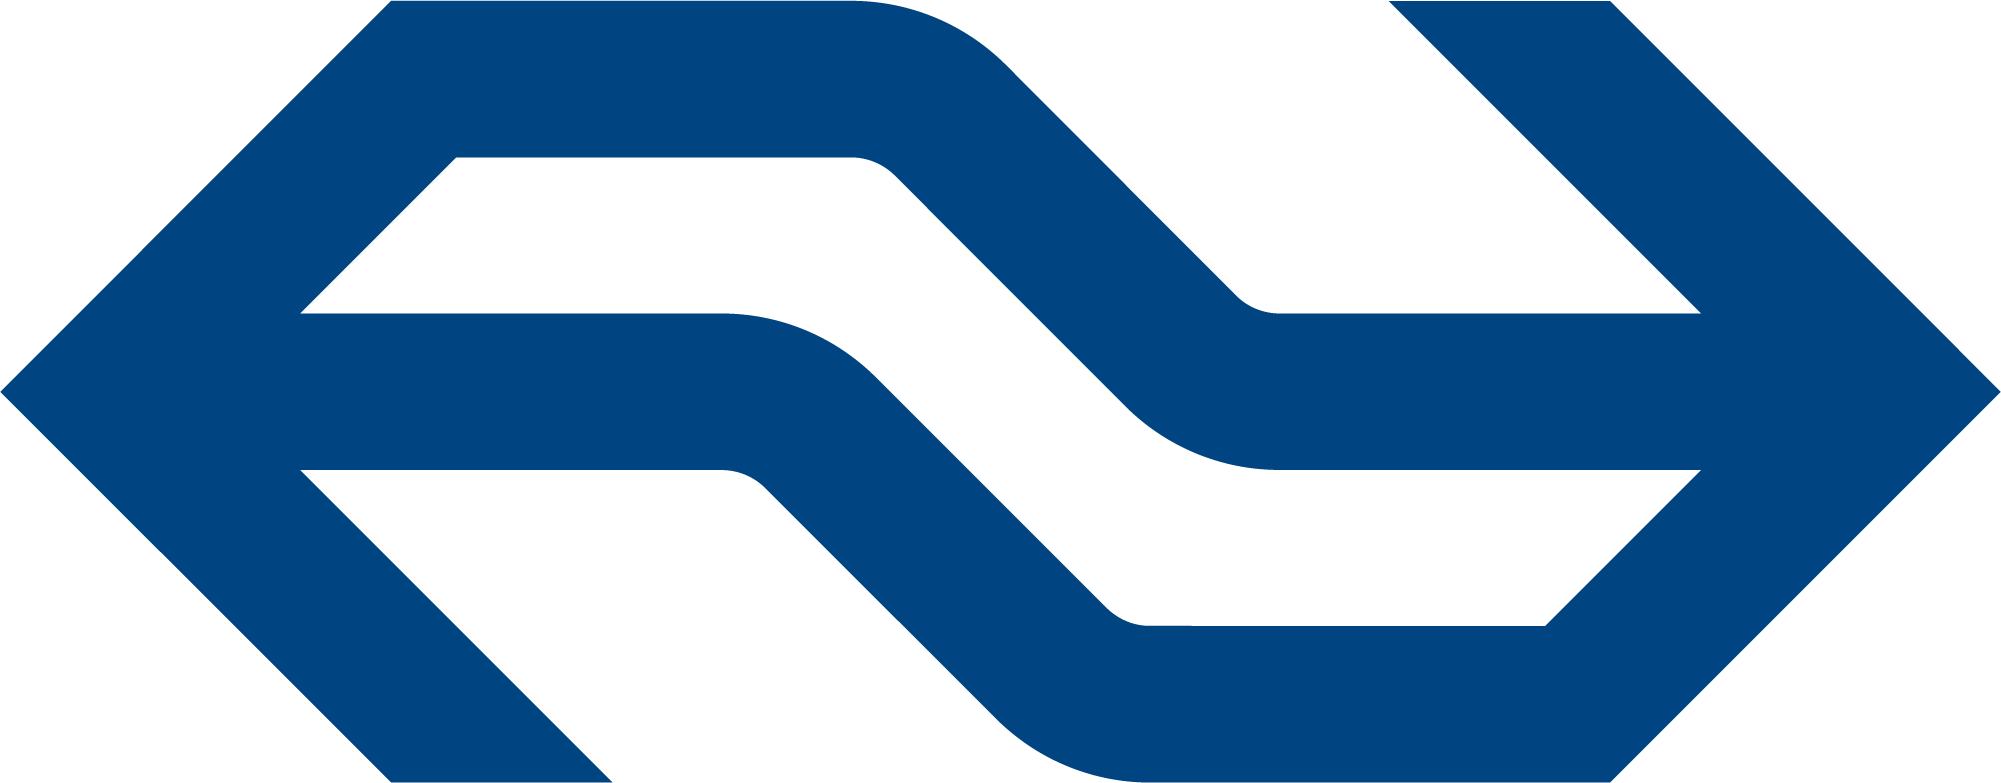 Nederlandse Spoorwegen user logo